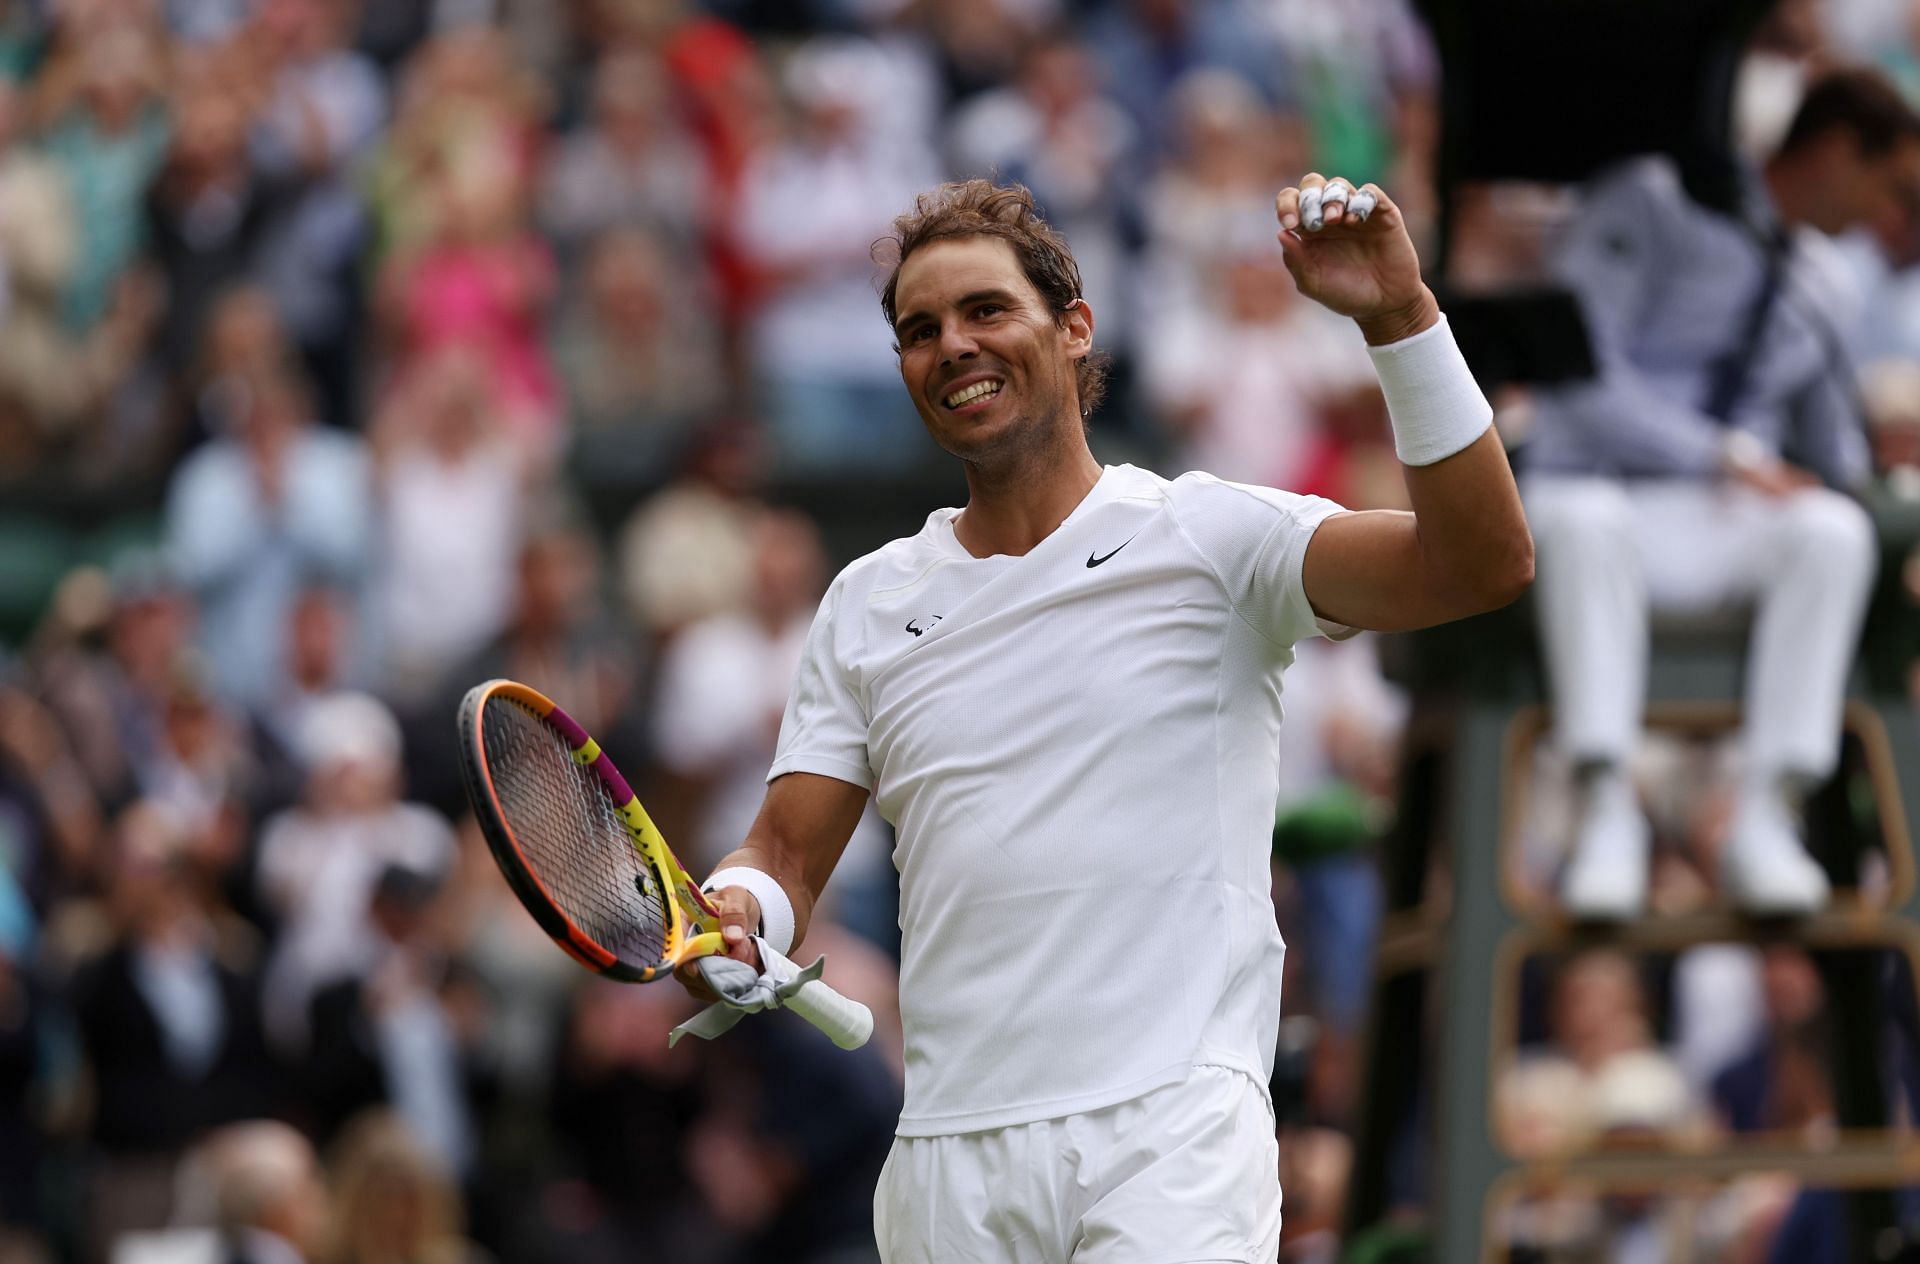 Rafael Nadal will take on Ricardas Berankis in the second round of Wimbledon